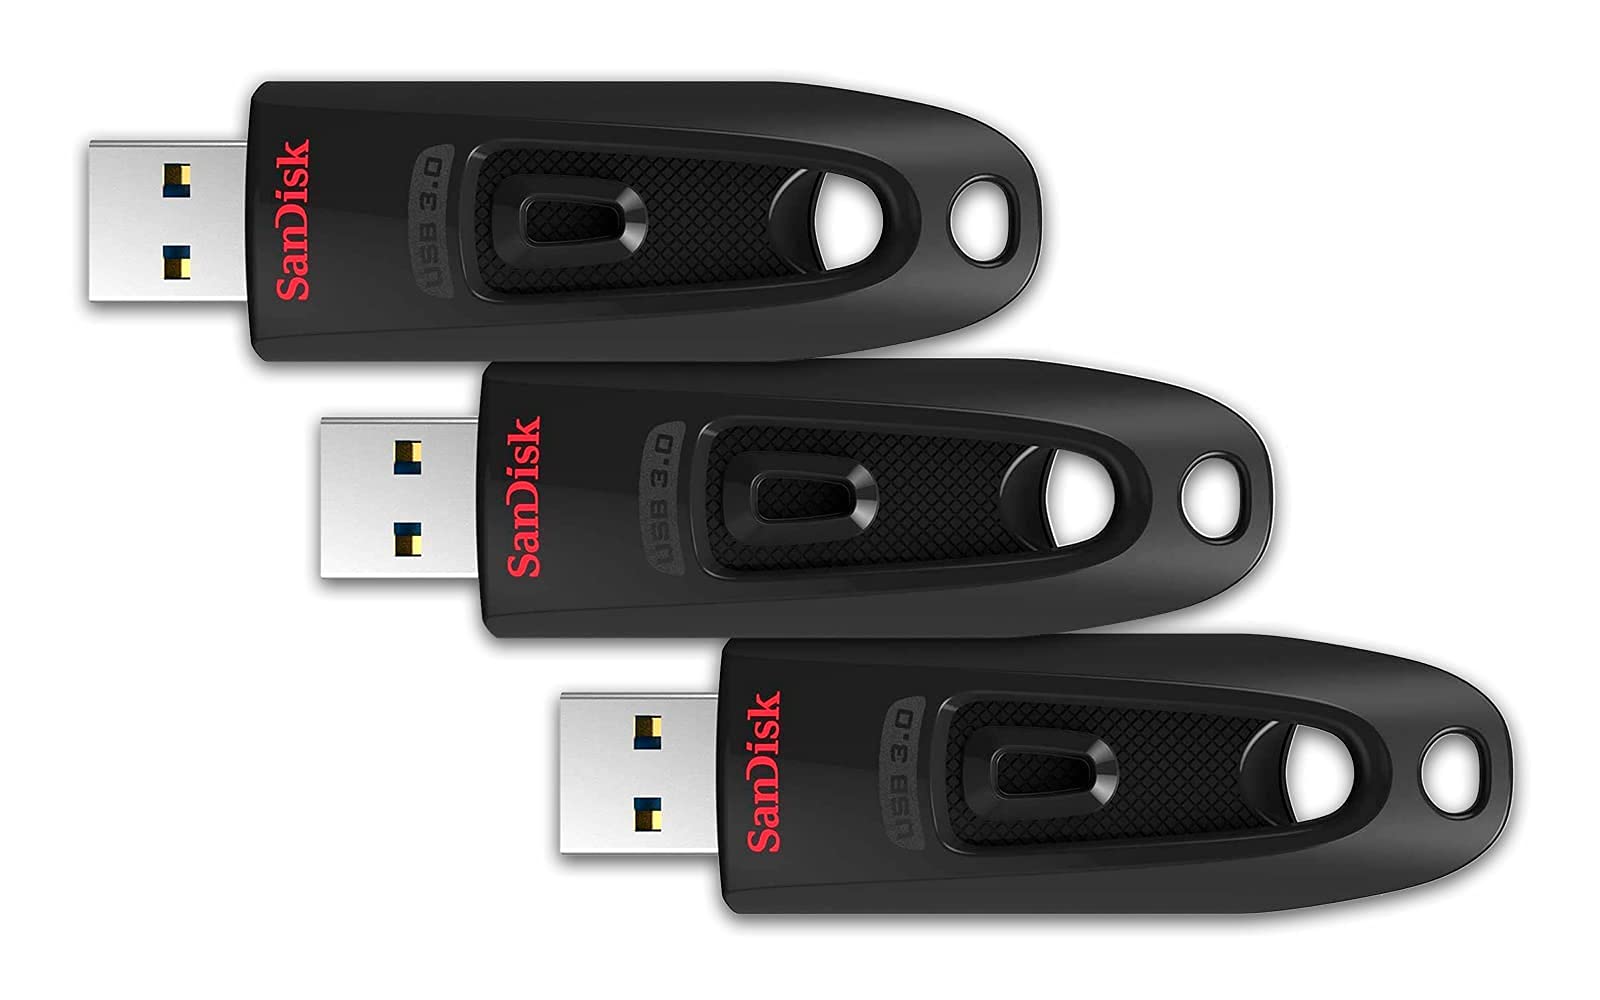 SanDisk Ultra 64GB USB Flash Drive USB 3.0 up to 130MB/s Read - Triple Pack